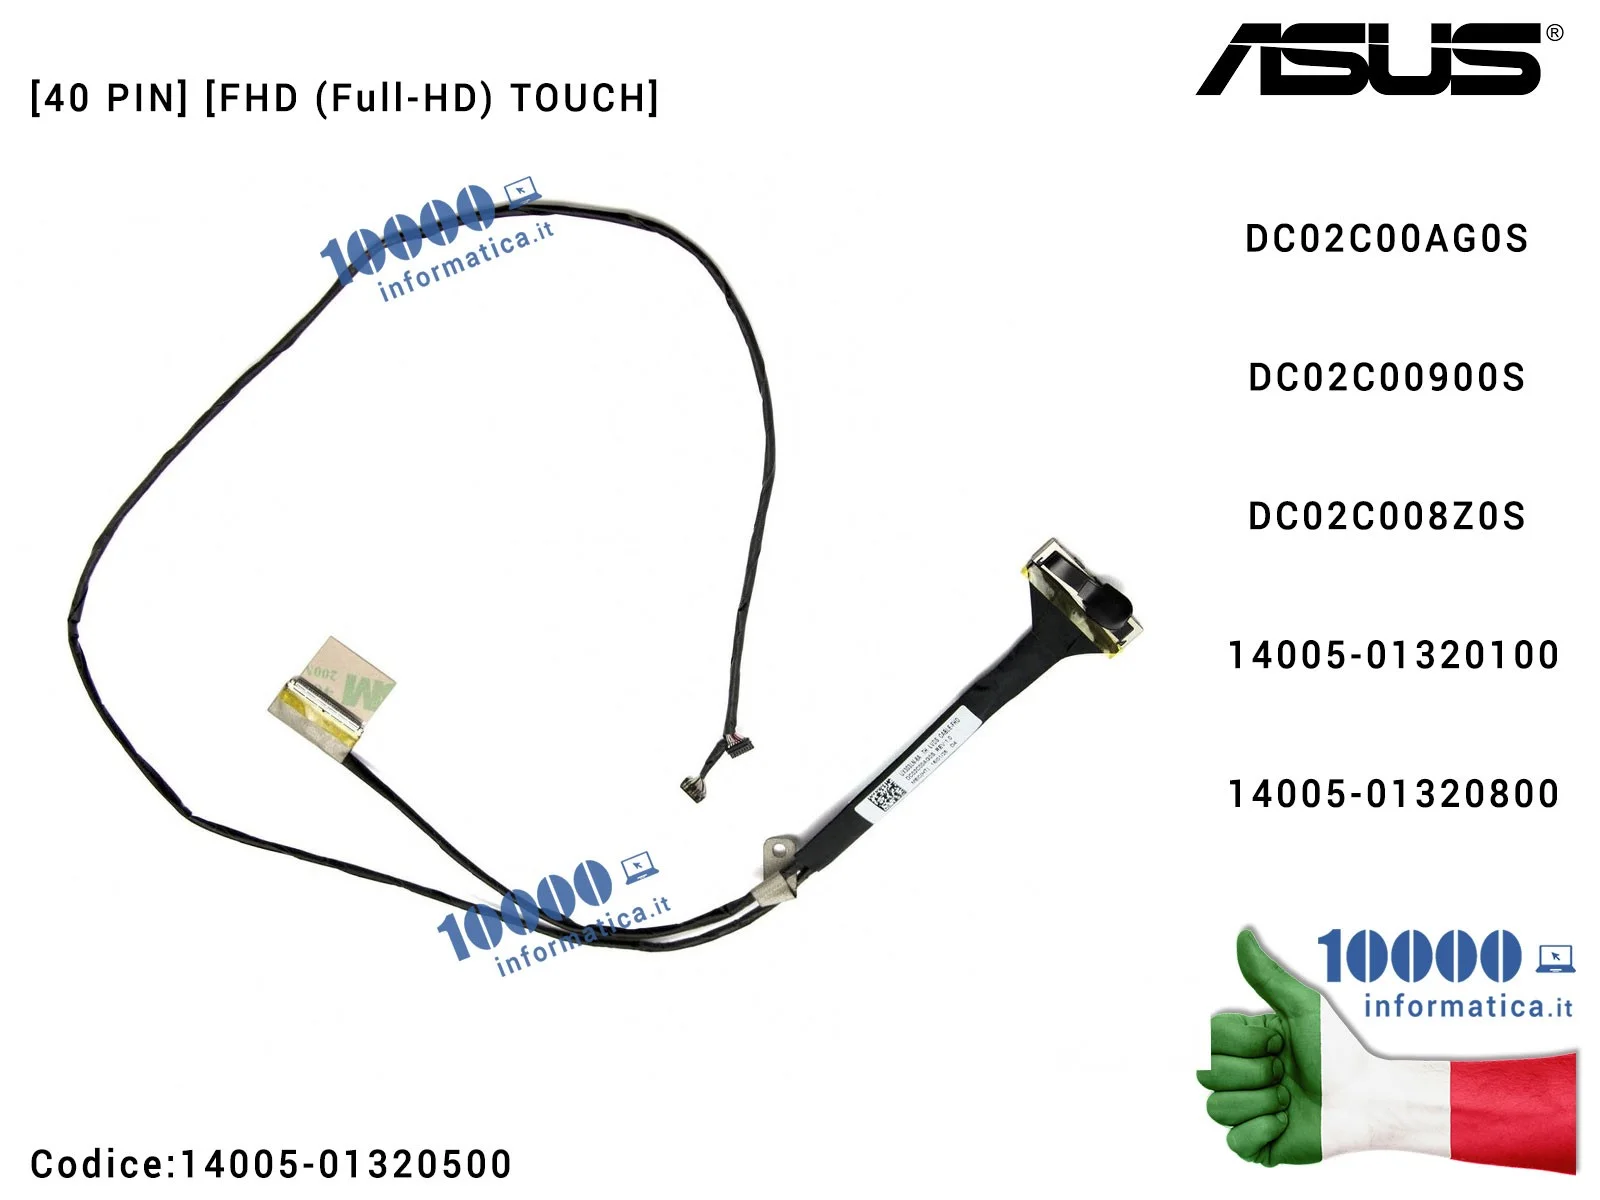 14005-01320500 Cavo Flat LCD ASUS [40 PIN] [FHD (Full-HD) TOUCH] ZenBook UX303 UX303L UX303LA UX303LB UX303LN UX303UB DC02C00...